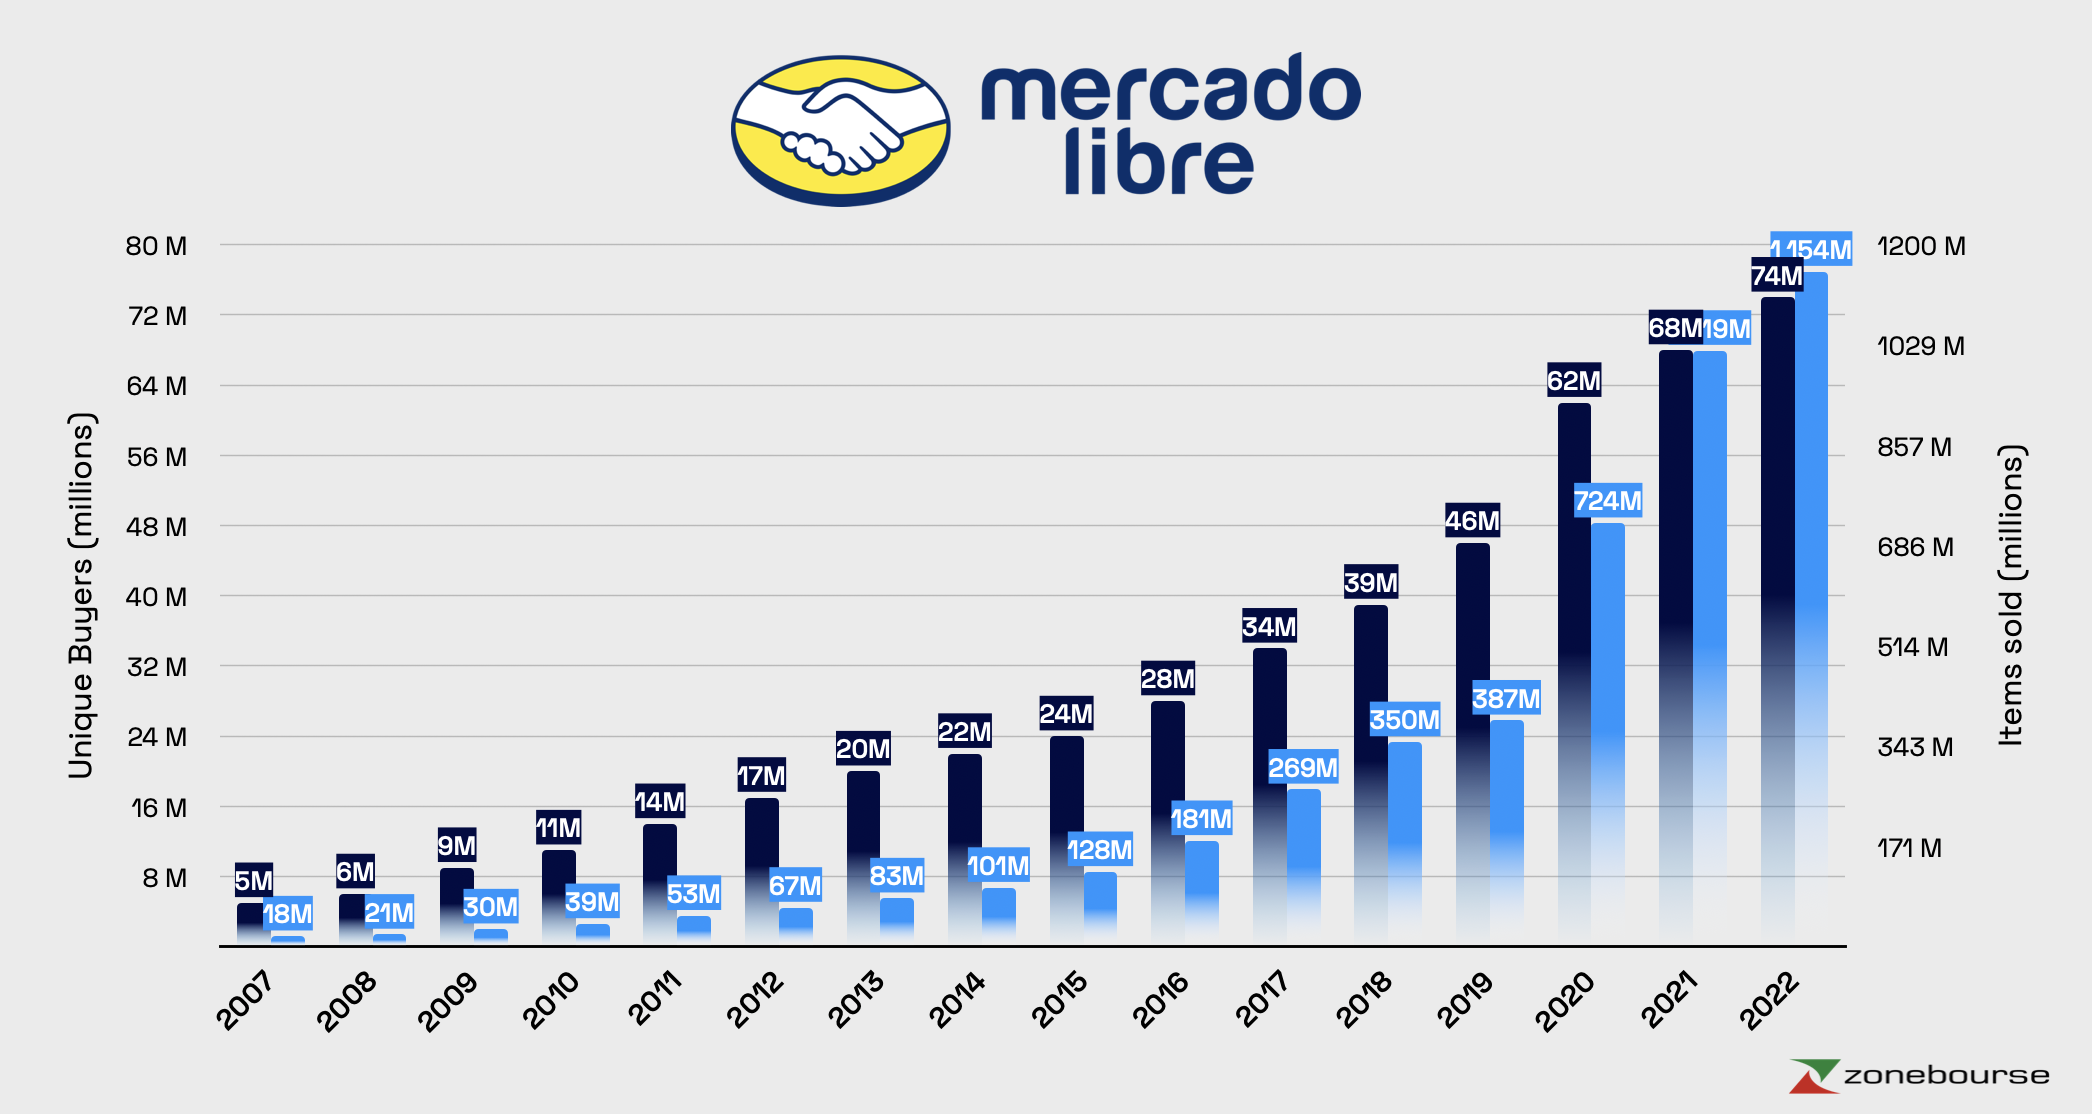 MercadoLibre, Inc. (MELI) Stock Price, Quote, News & Analysis